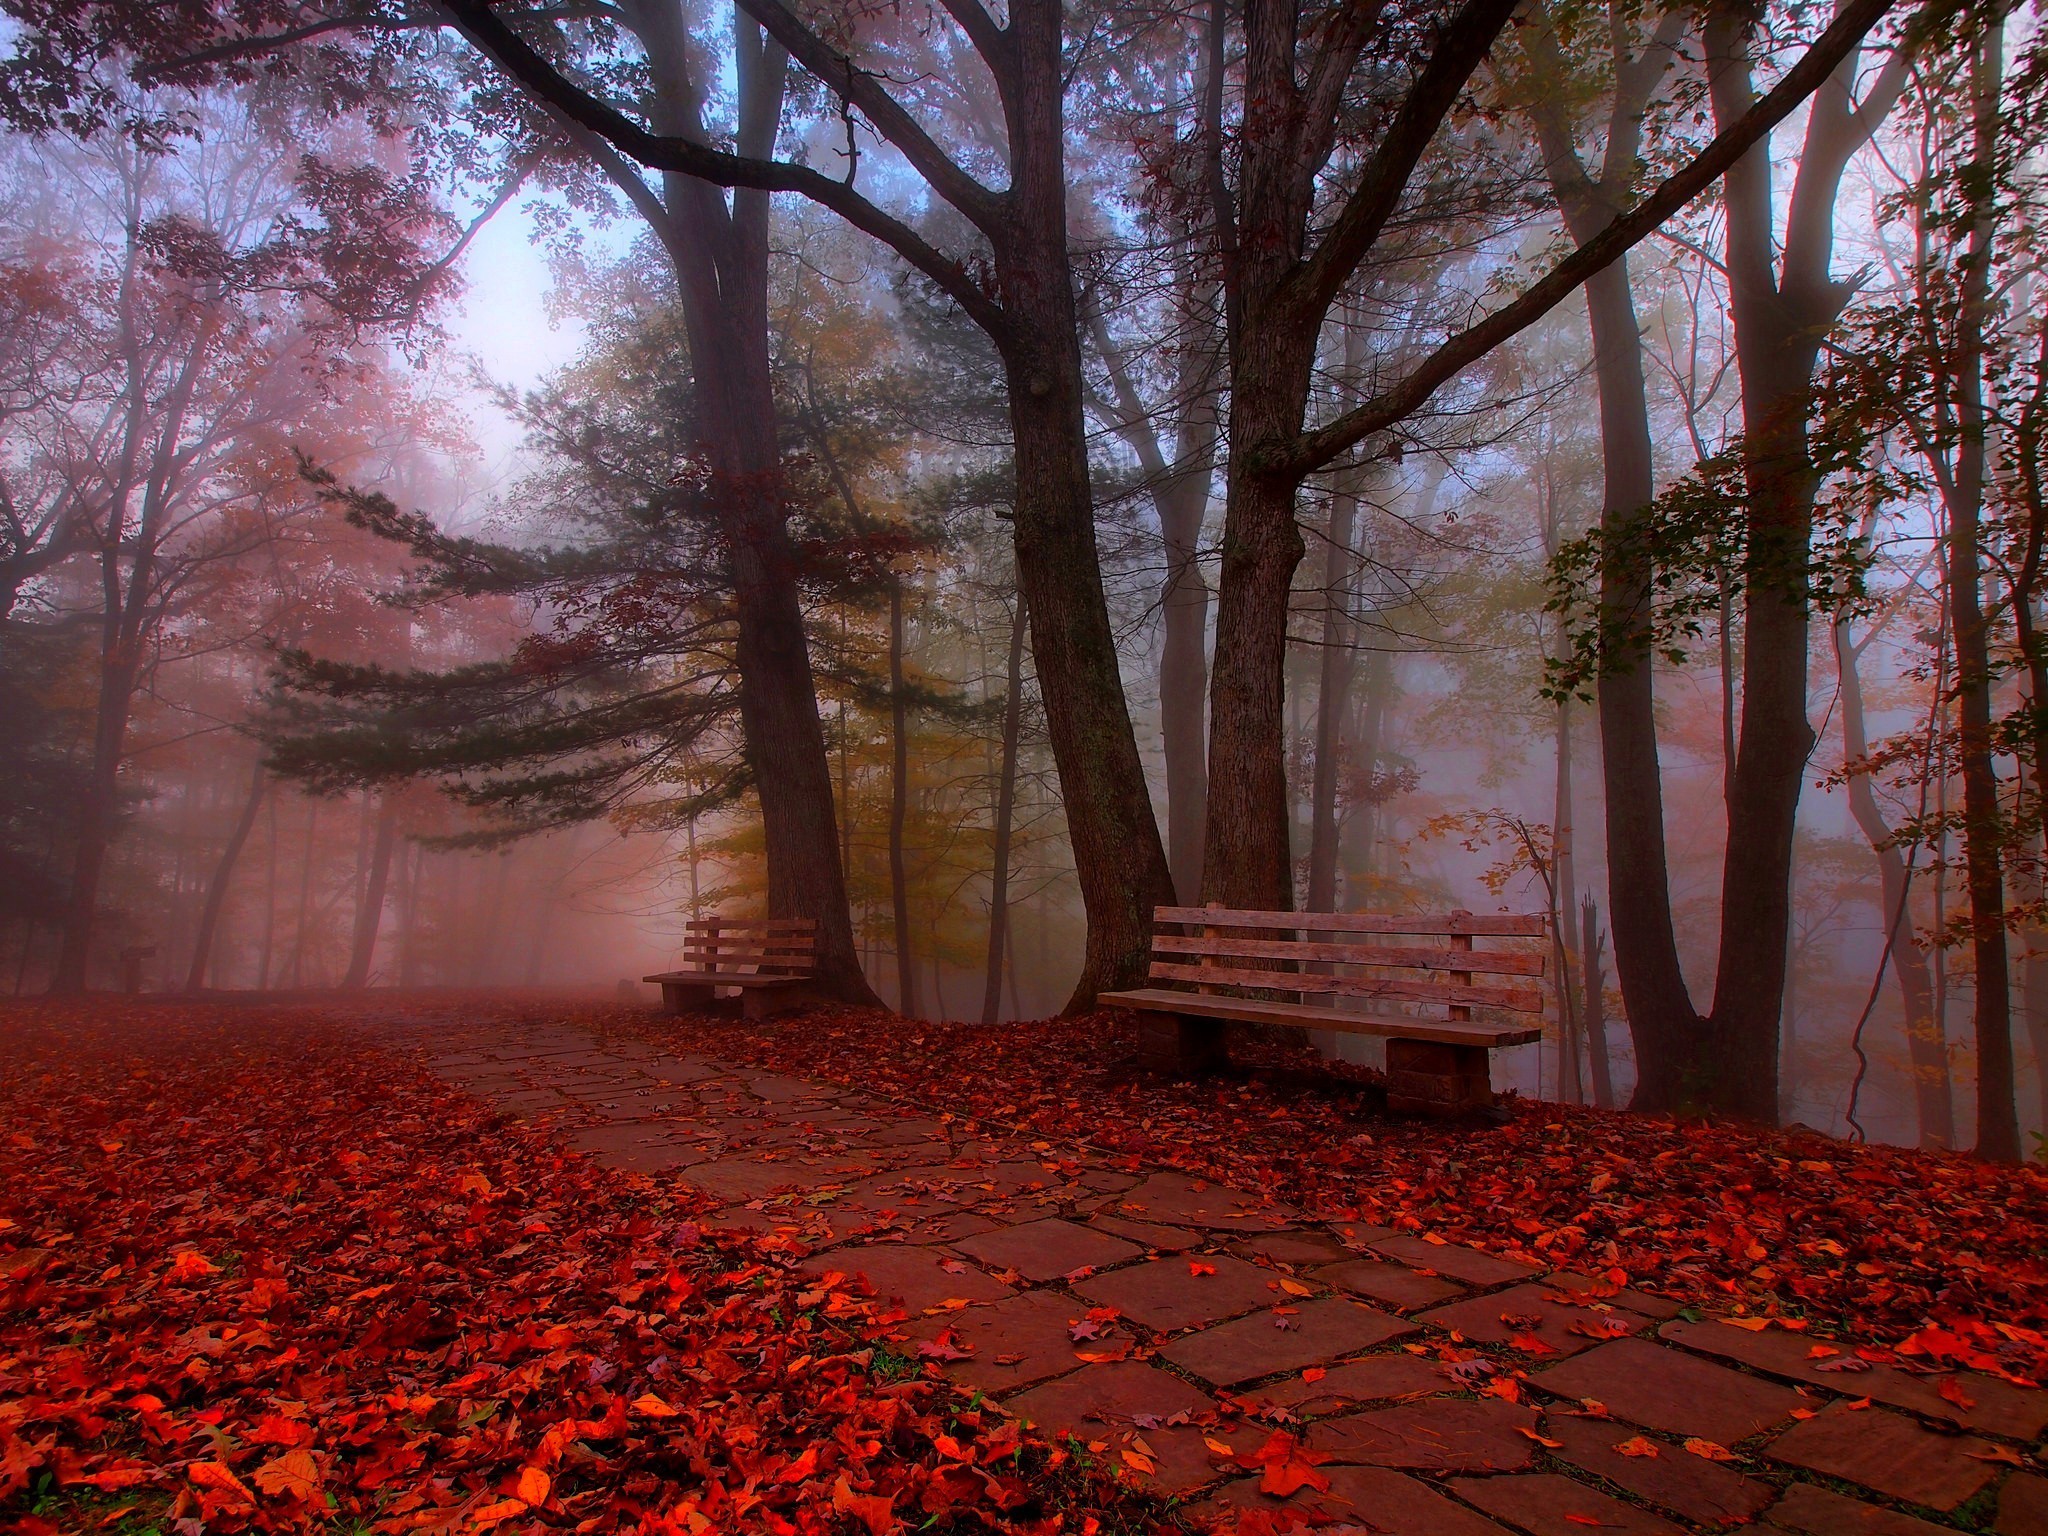 Bench in Autumn Forest by Bill Fultz